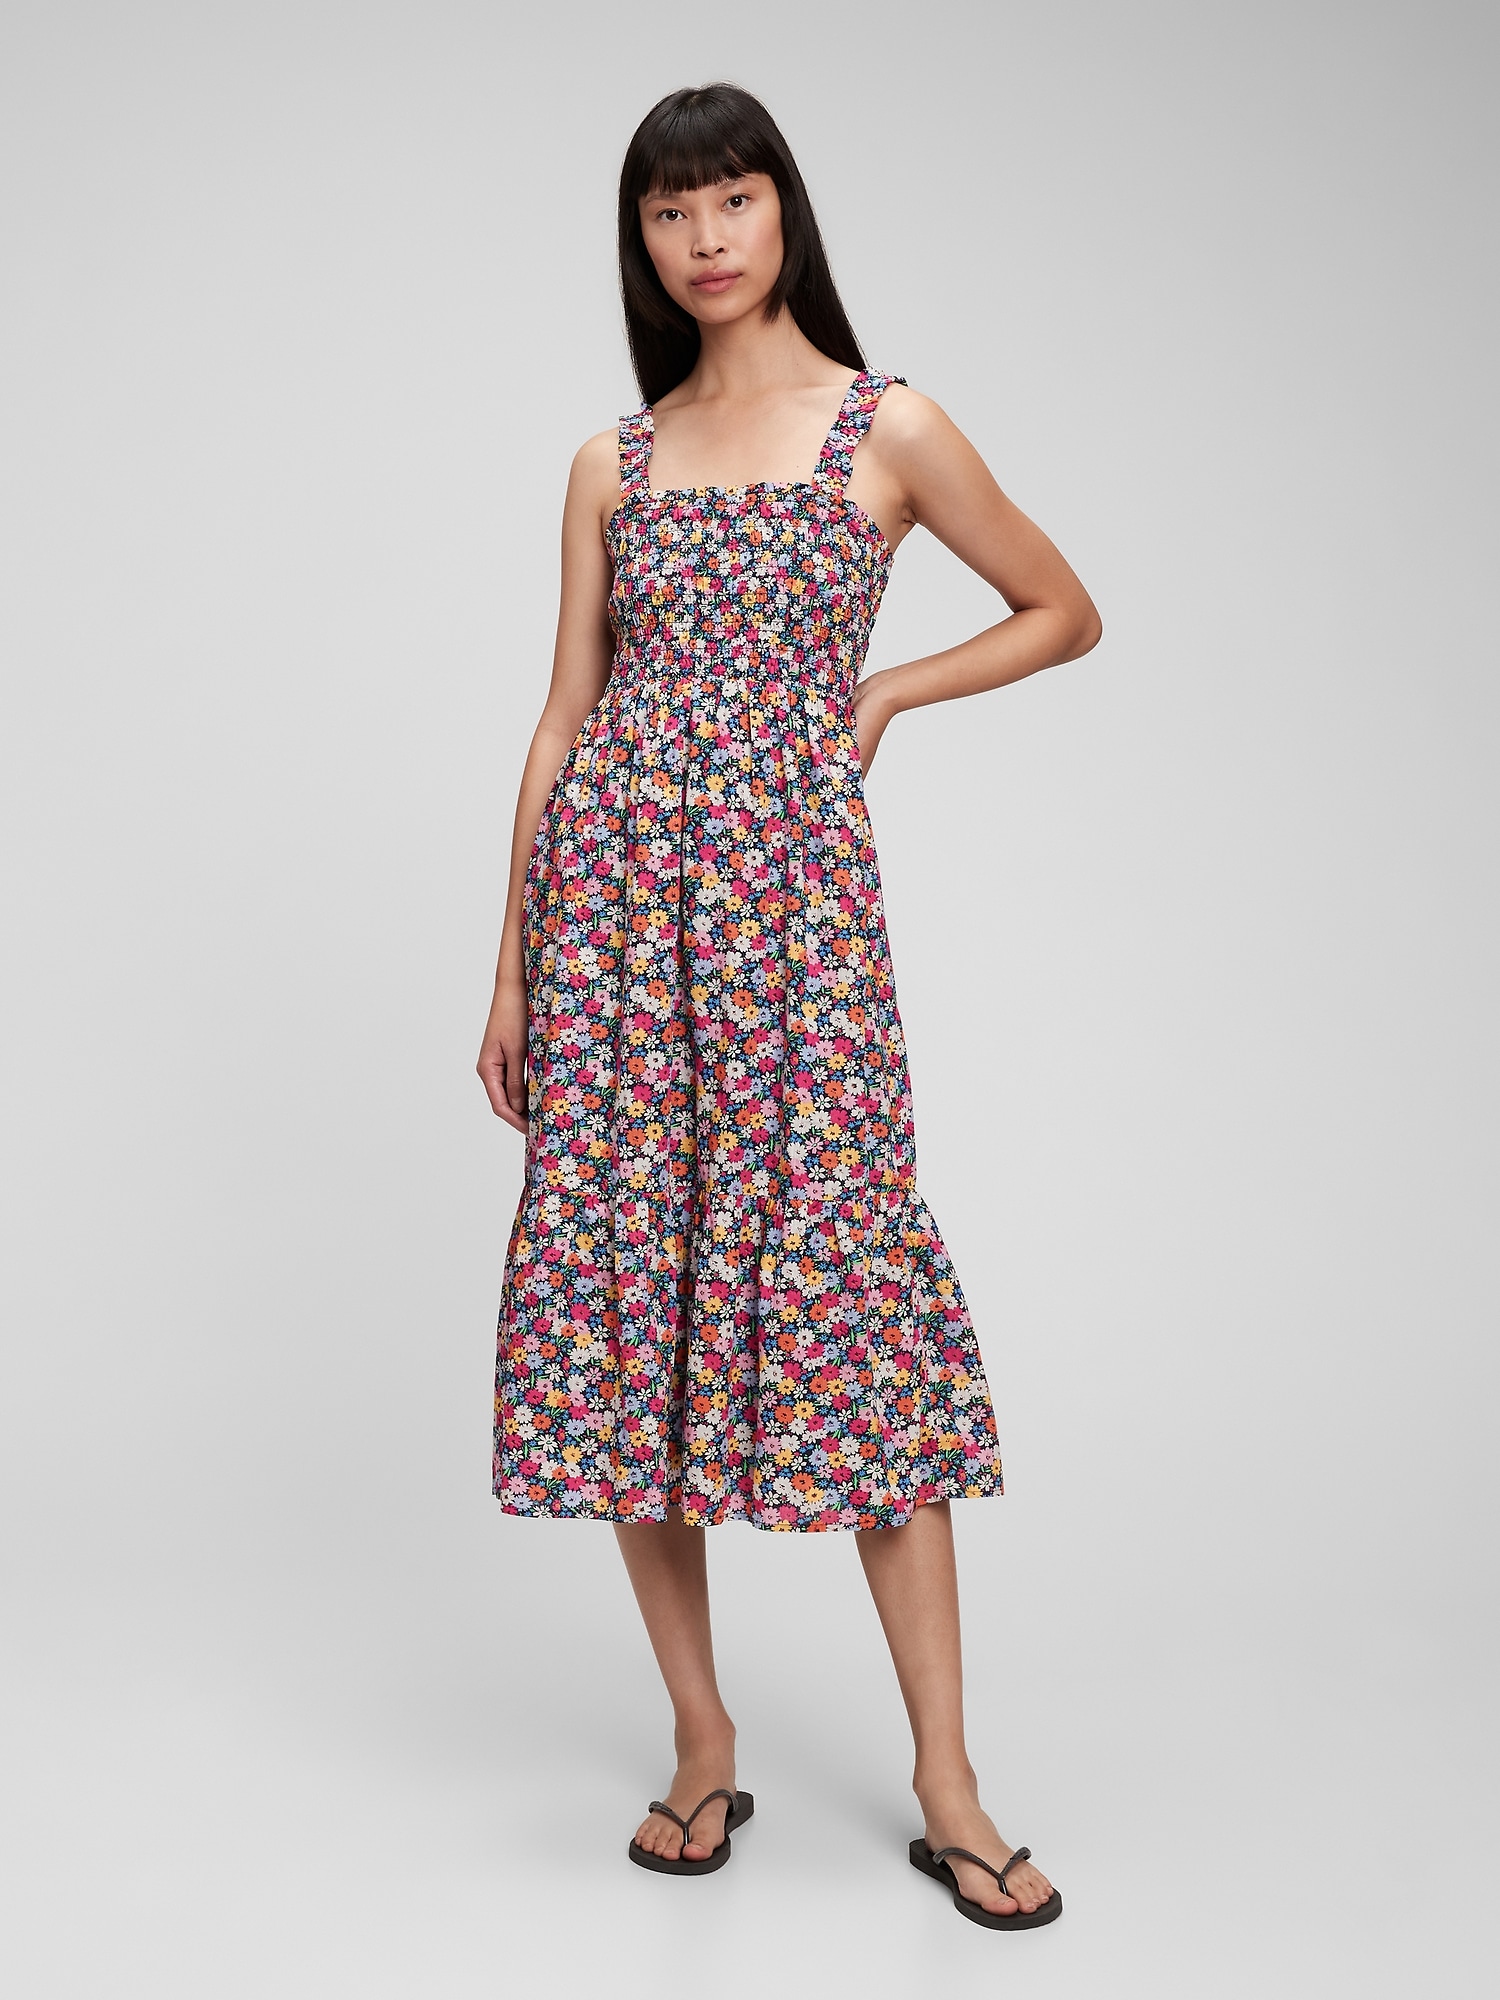 Smocked Floral Midi Dress | Gap